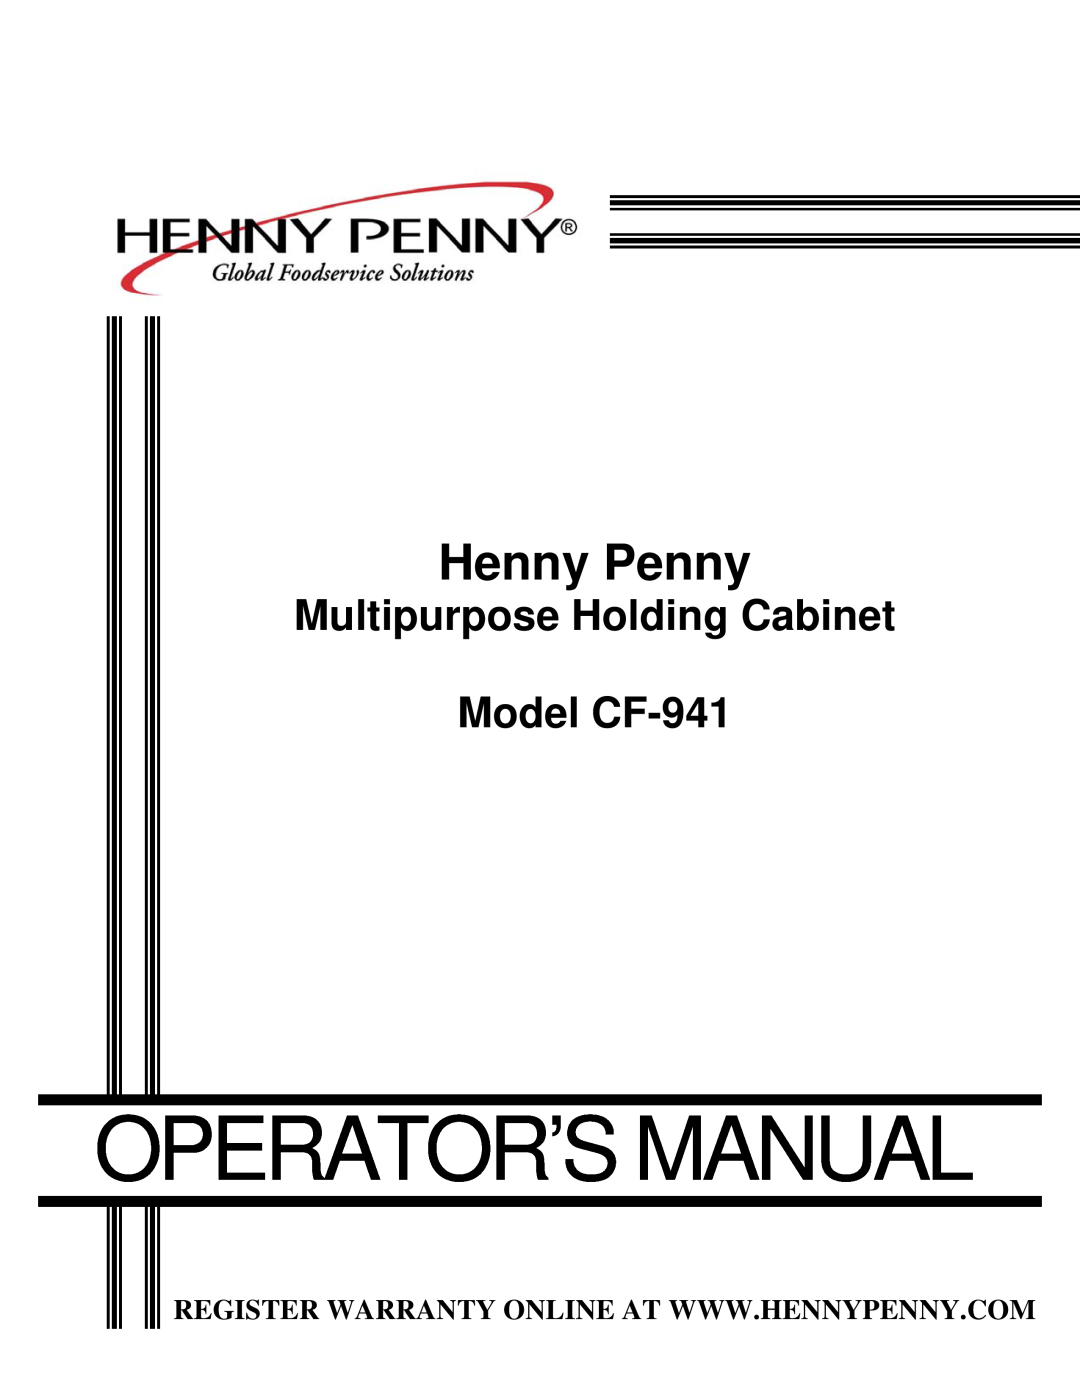 Henny Penny warranty Operator’S Manual, Henny Penny, Multipurpose Holding Cabinet Model CF-941 